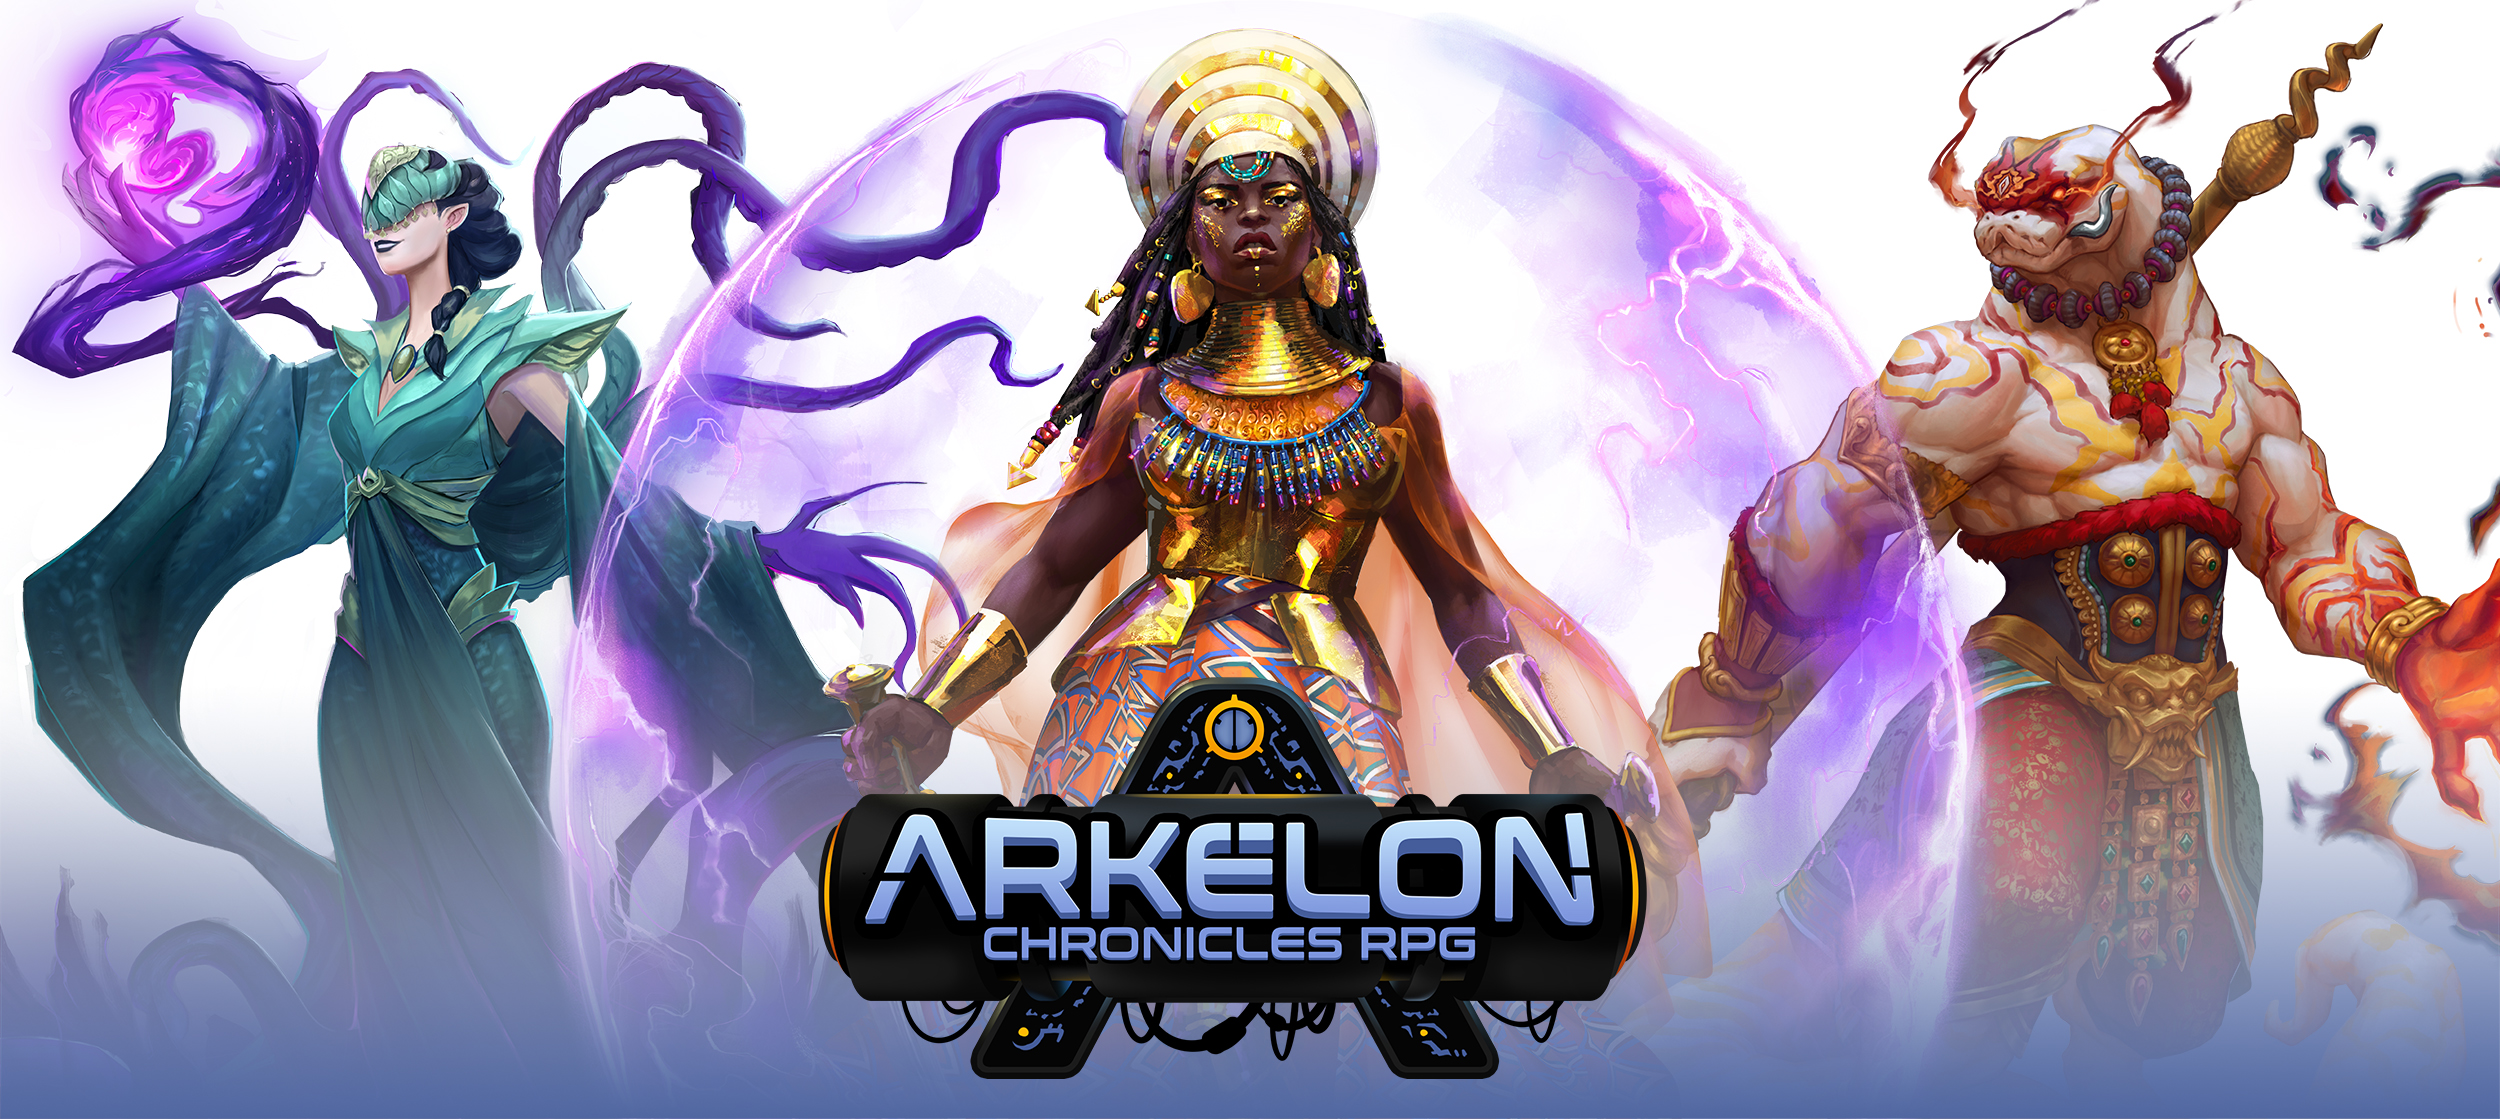 Arkelon Chronicles